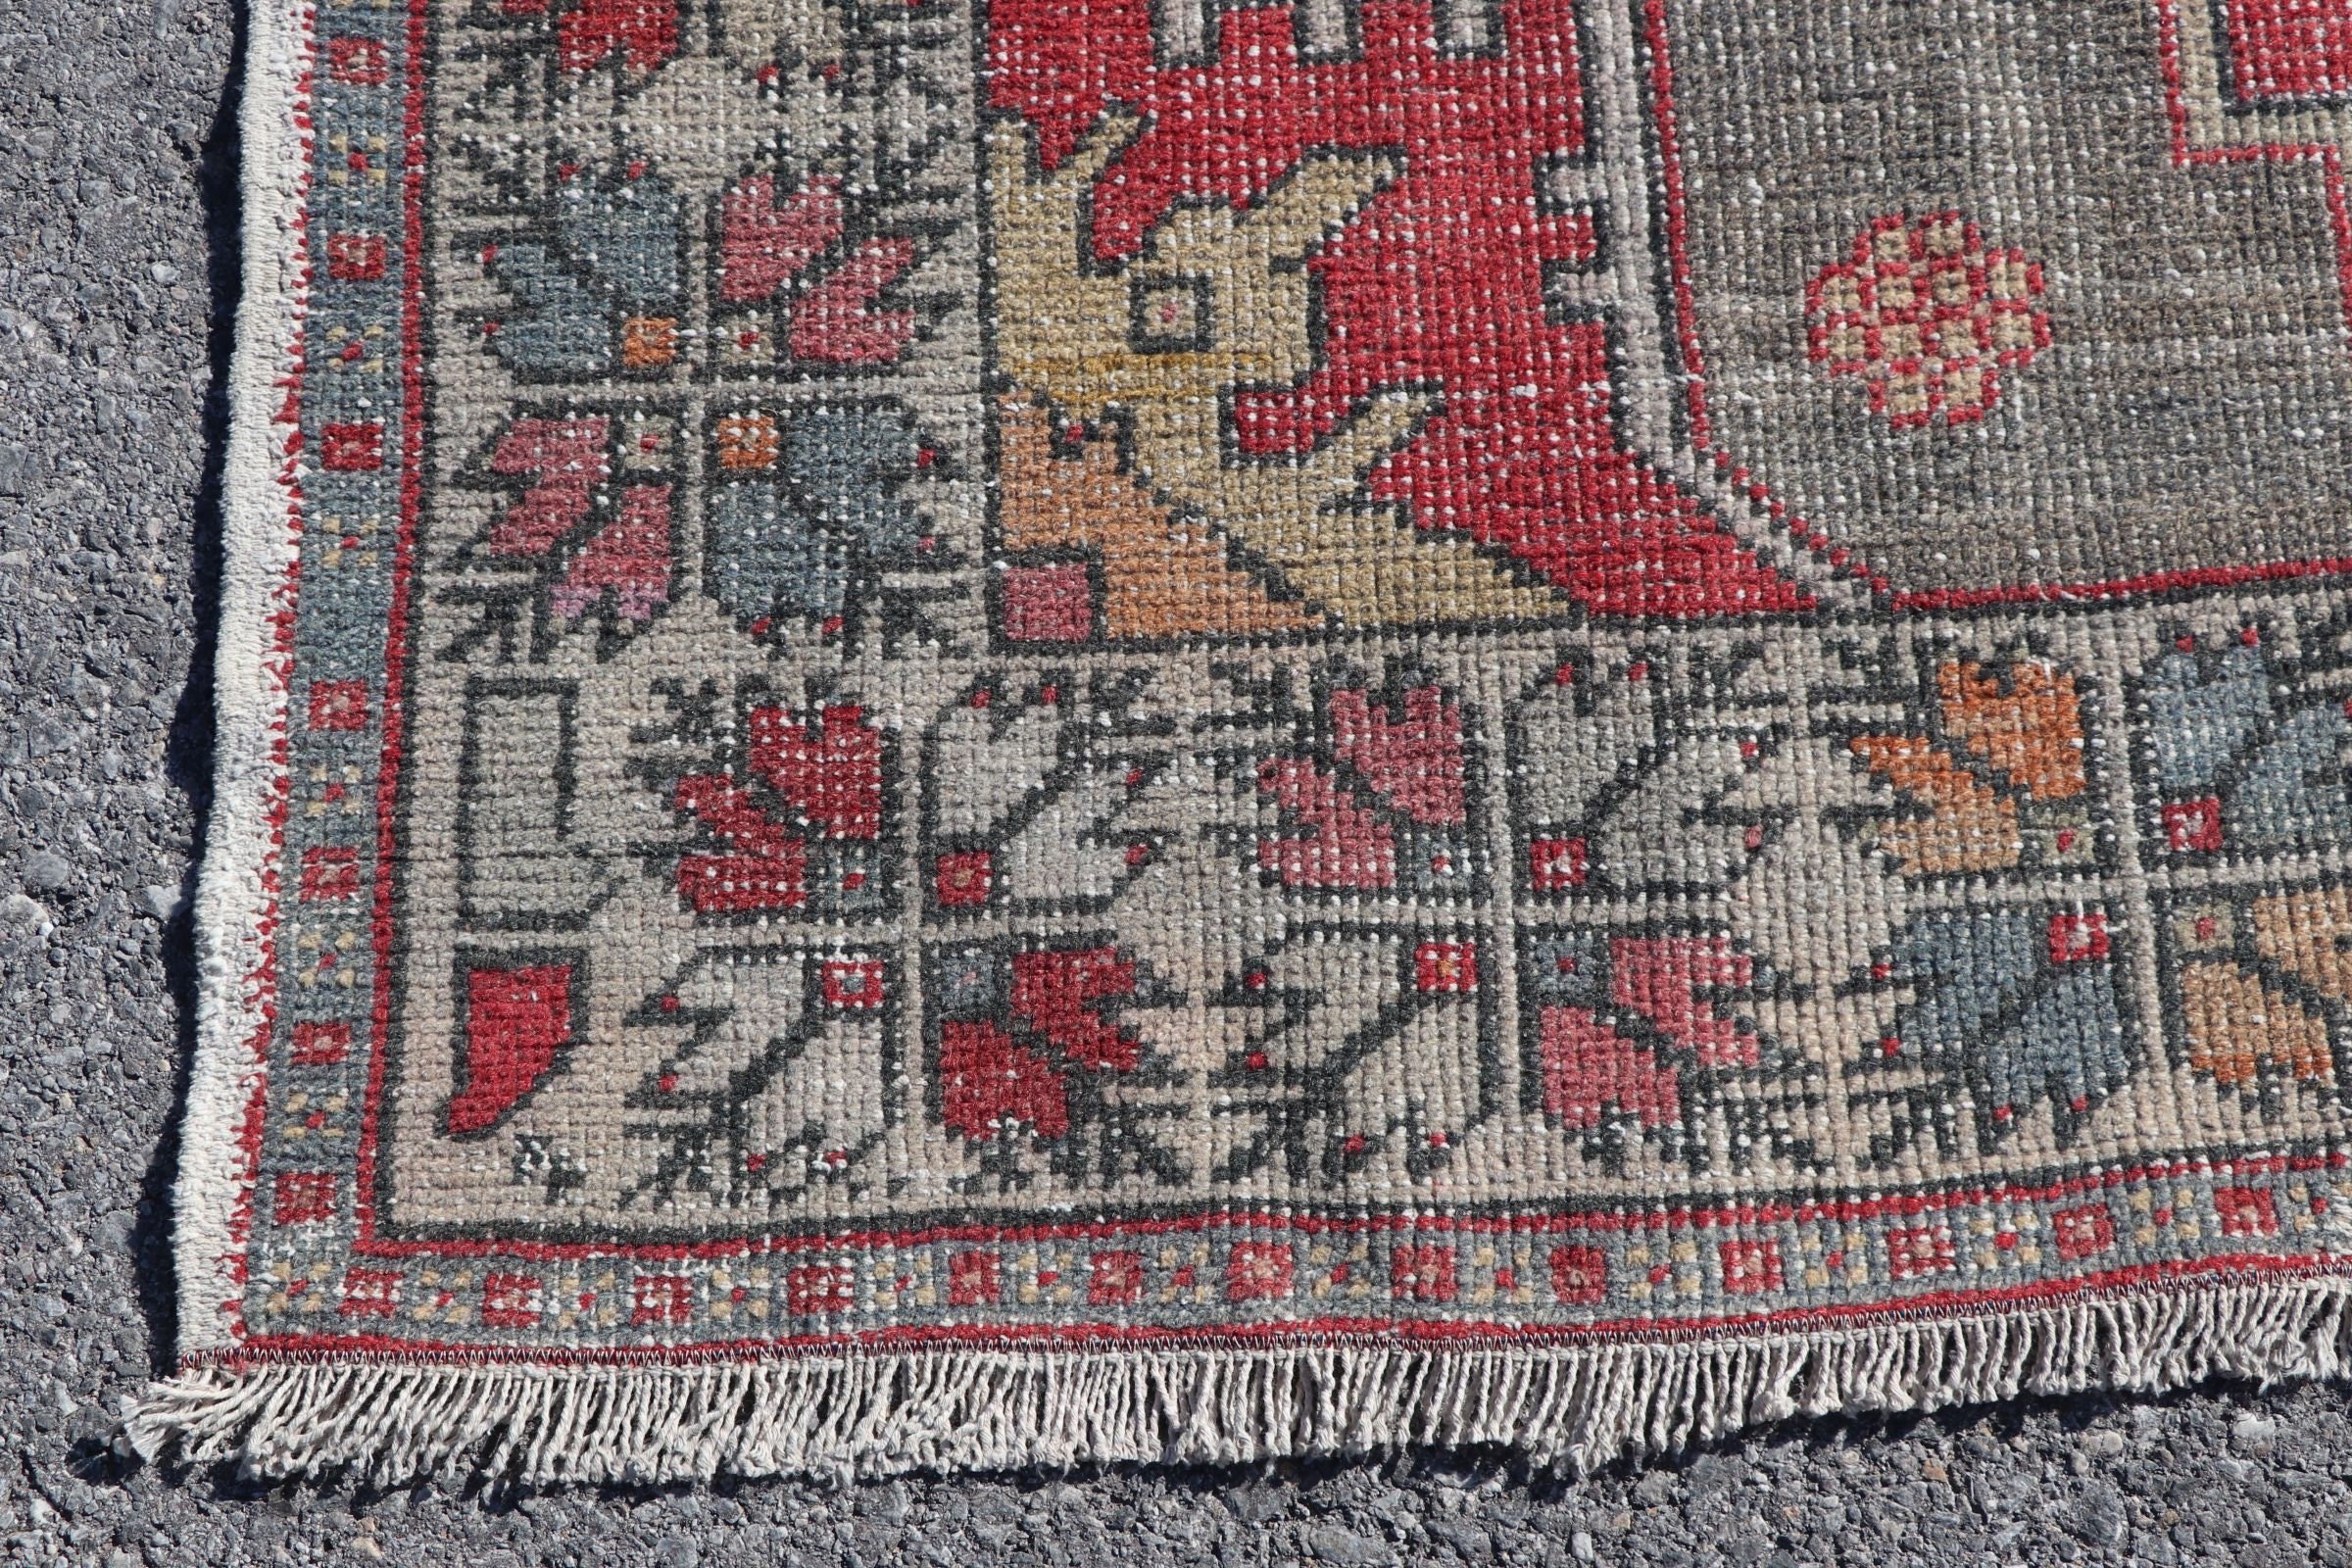 Anatolian Rug, Boho Area Rug Rugs, 4.5x8.2 ft Area Rugs, Vintage Rug, Kitchen Rug, Red Moroccan Rug, Floor Rugs, Bedroom Rug, Turkish Rugs